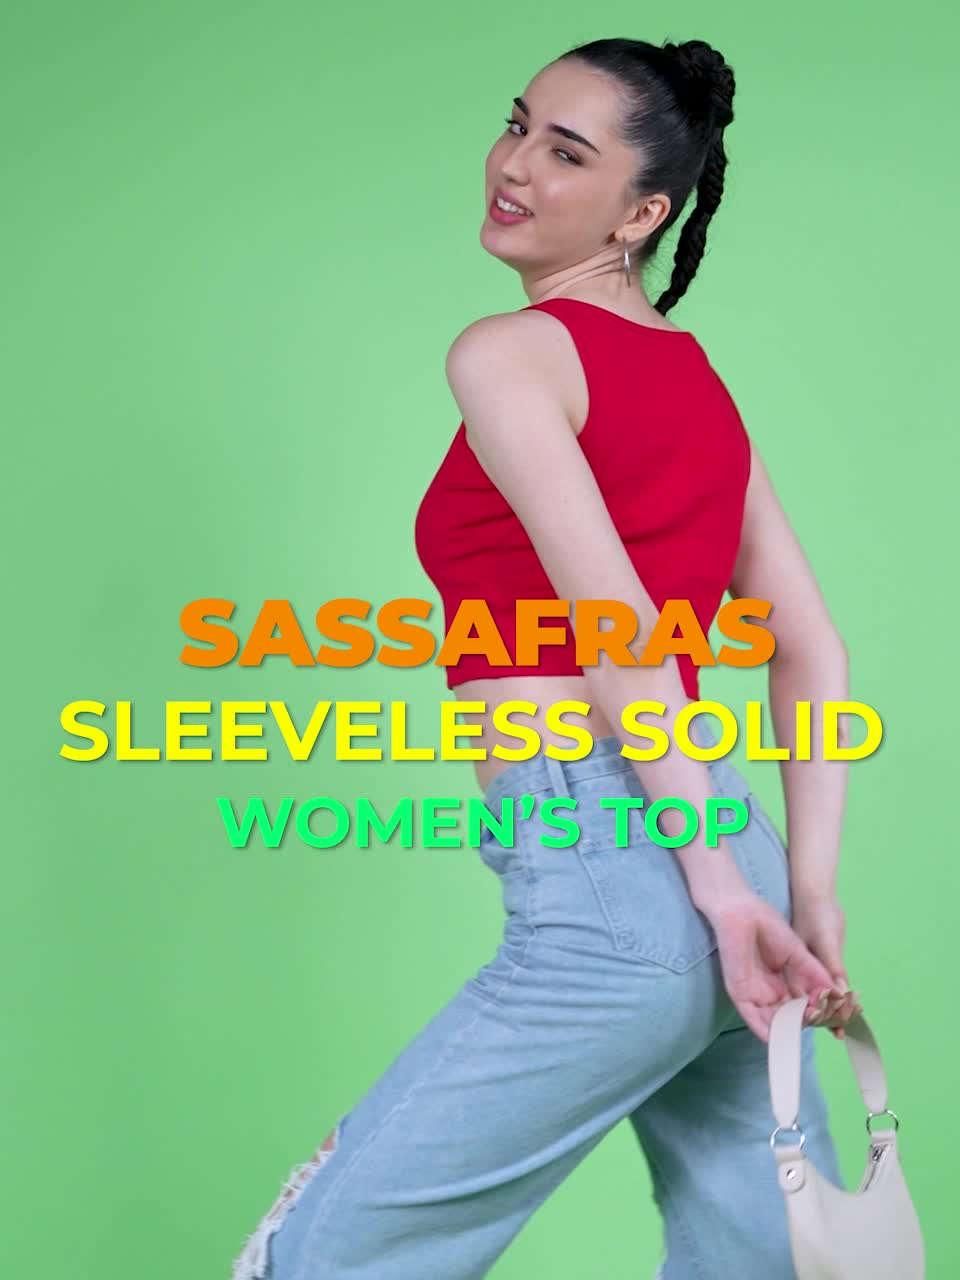 SASSAFRAS Casual Sleeveless Solid Women Red Top - Buy SASSAFRAS